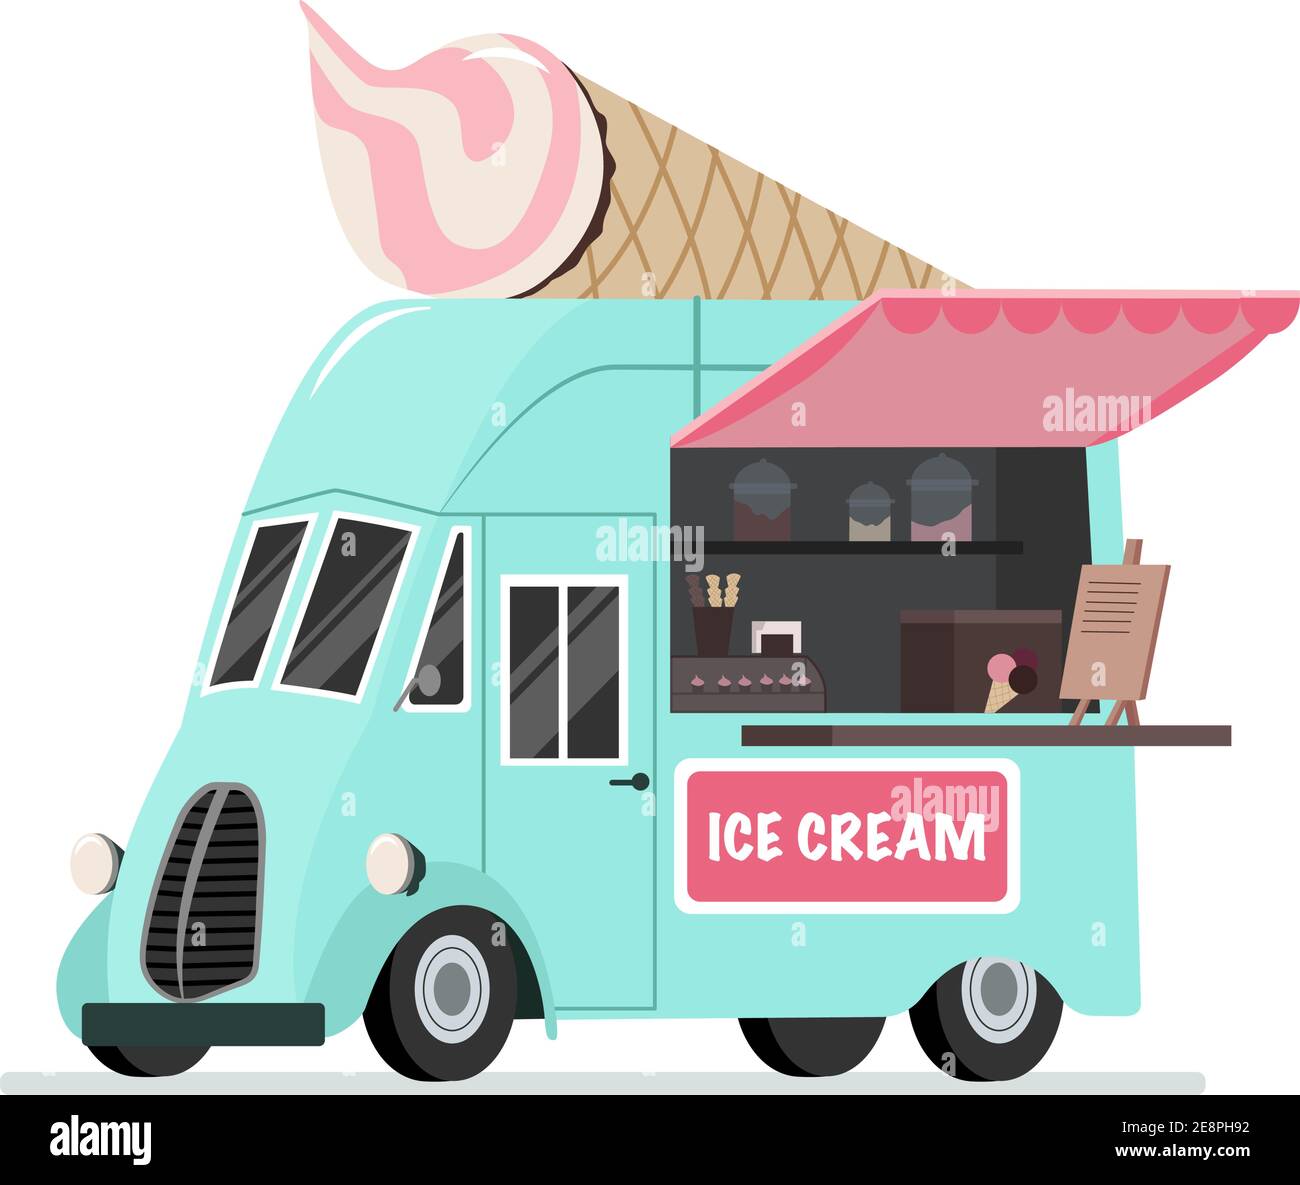 Ice cream food truck Stock Vector